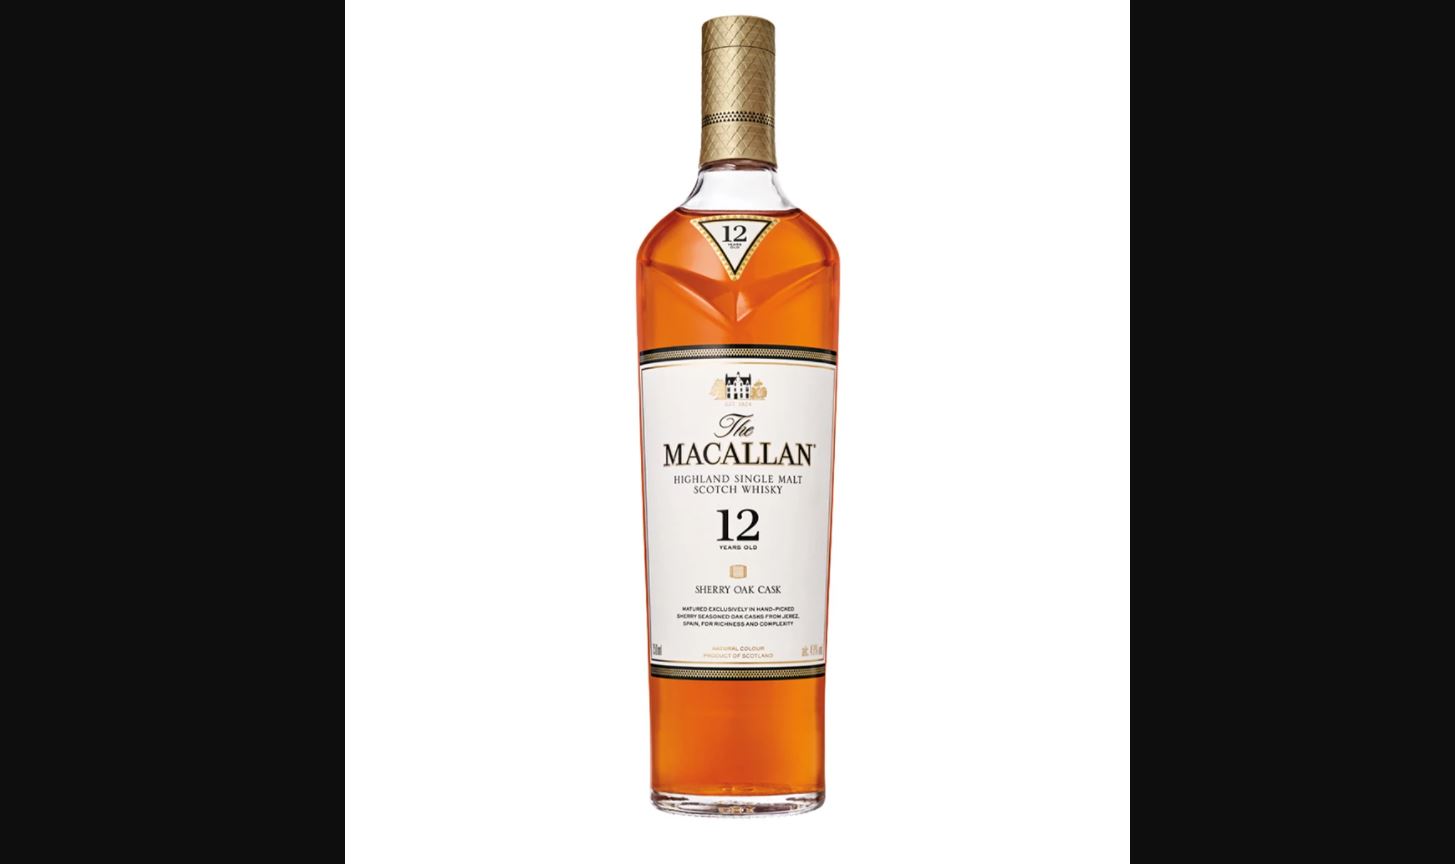 The Macallan 12 Year Sherry Oak Cask